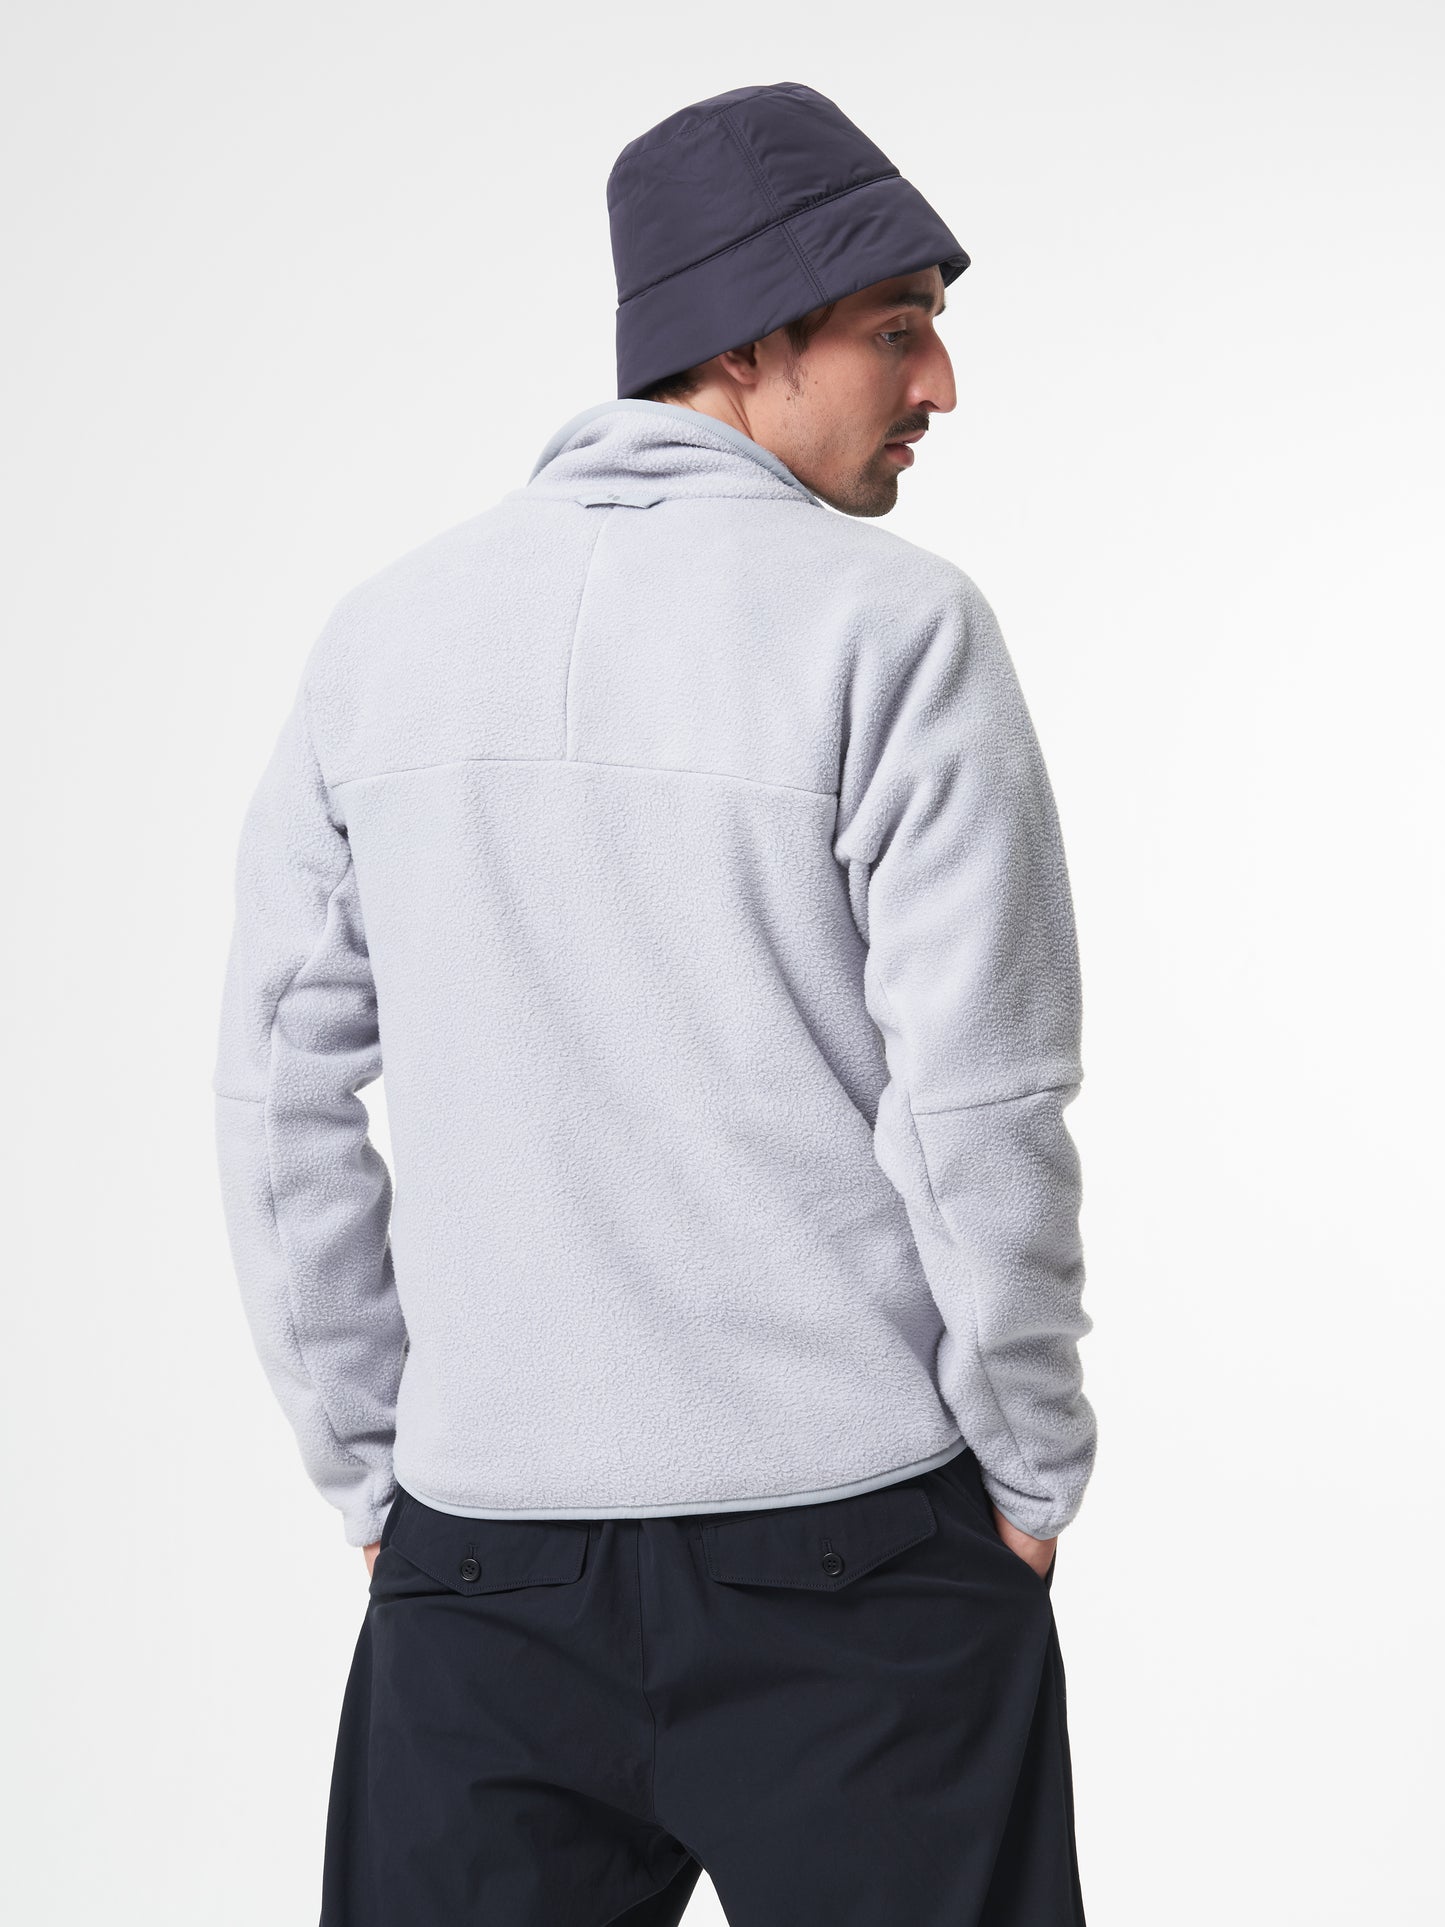 pinqponq-Fleece-Pullover-Iced-Grey-model-back